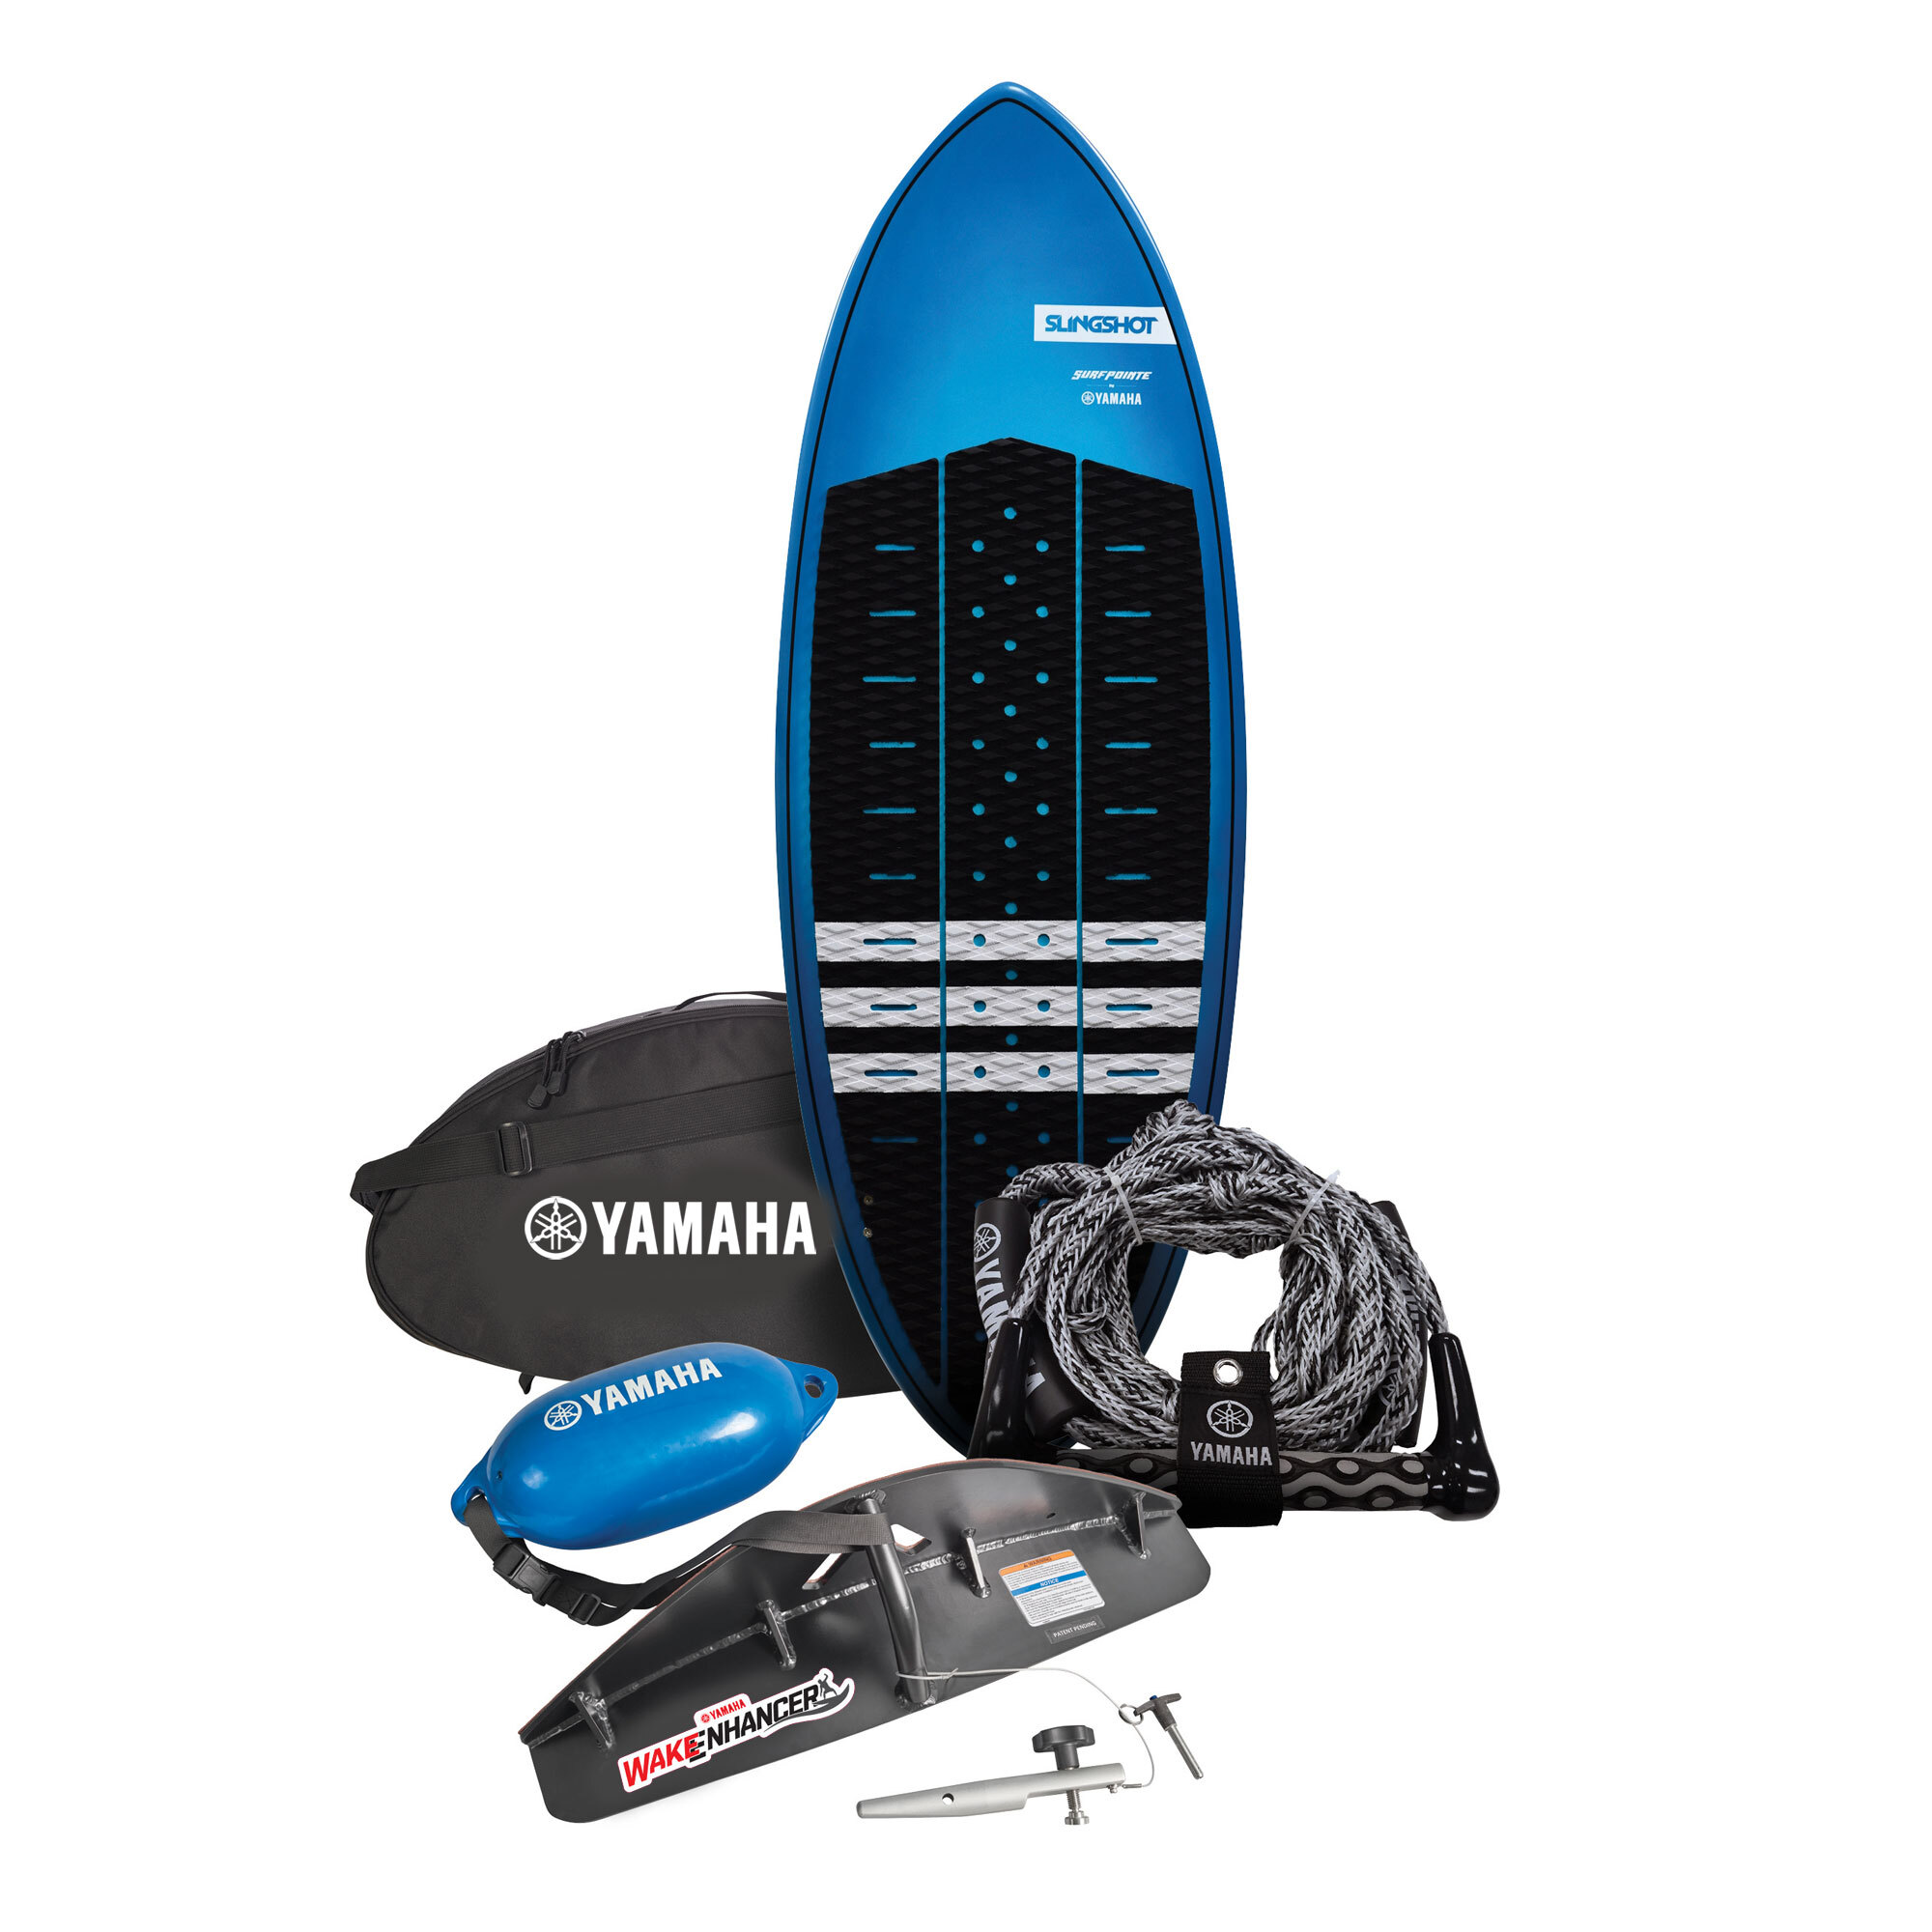 Yamaha Surf Package